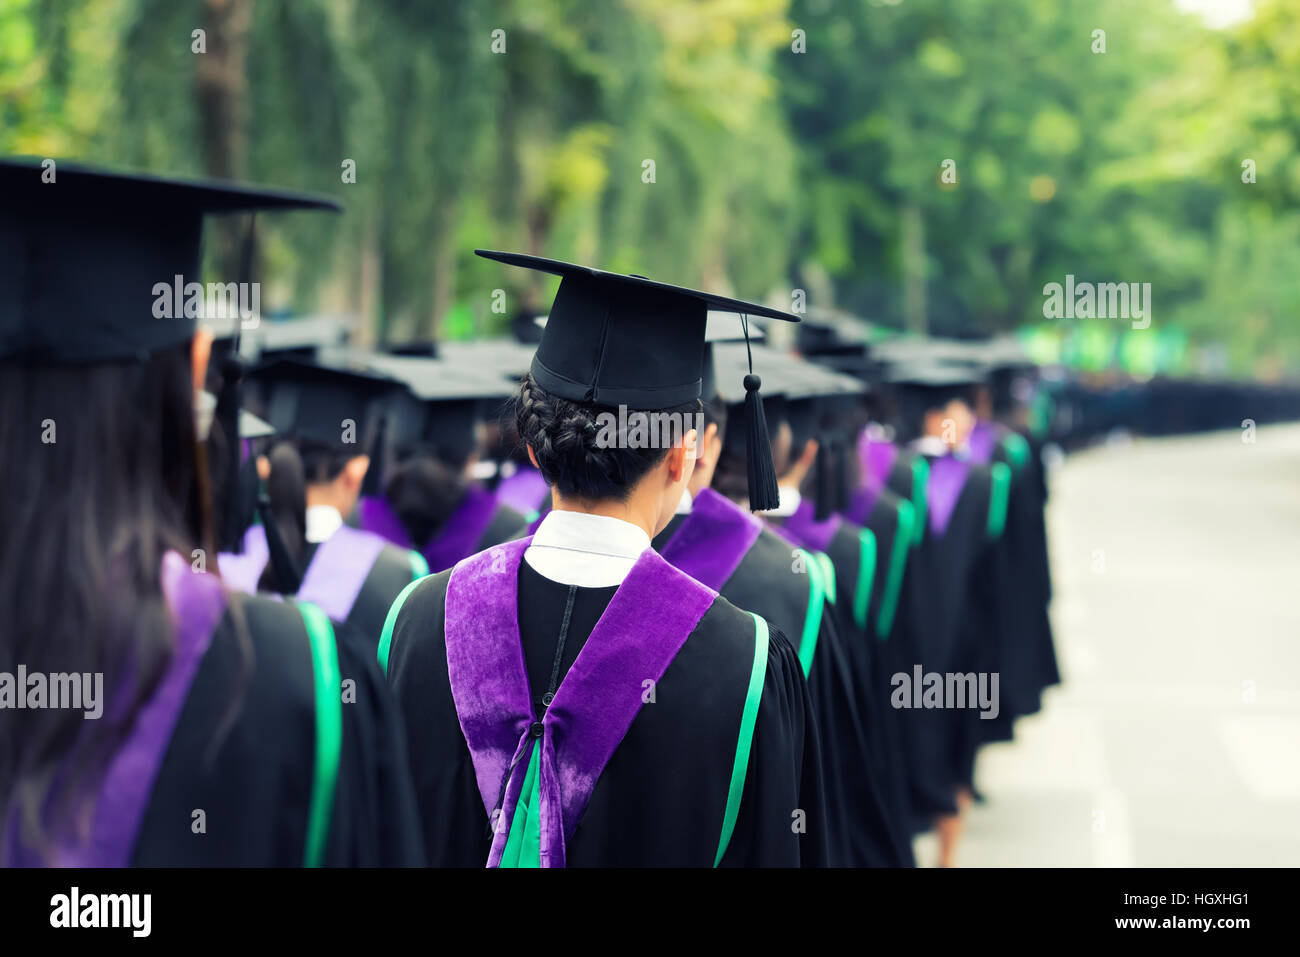 Rückseite des Absolventen während der Aufnahme an der Universität. Hautnah am graduate Cap. Farb-Ton-Bild. Stockfoto